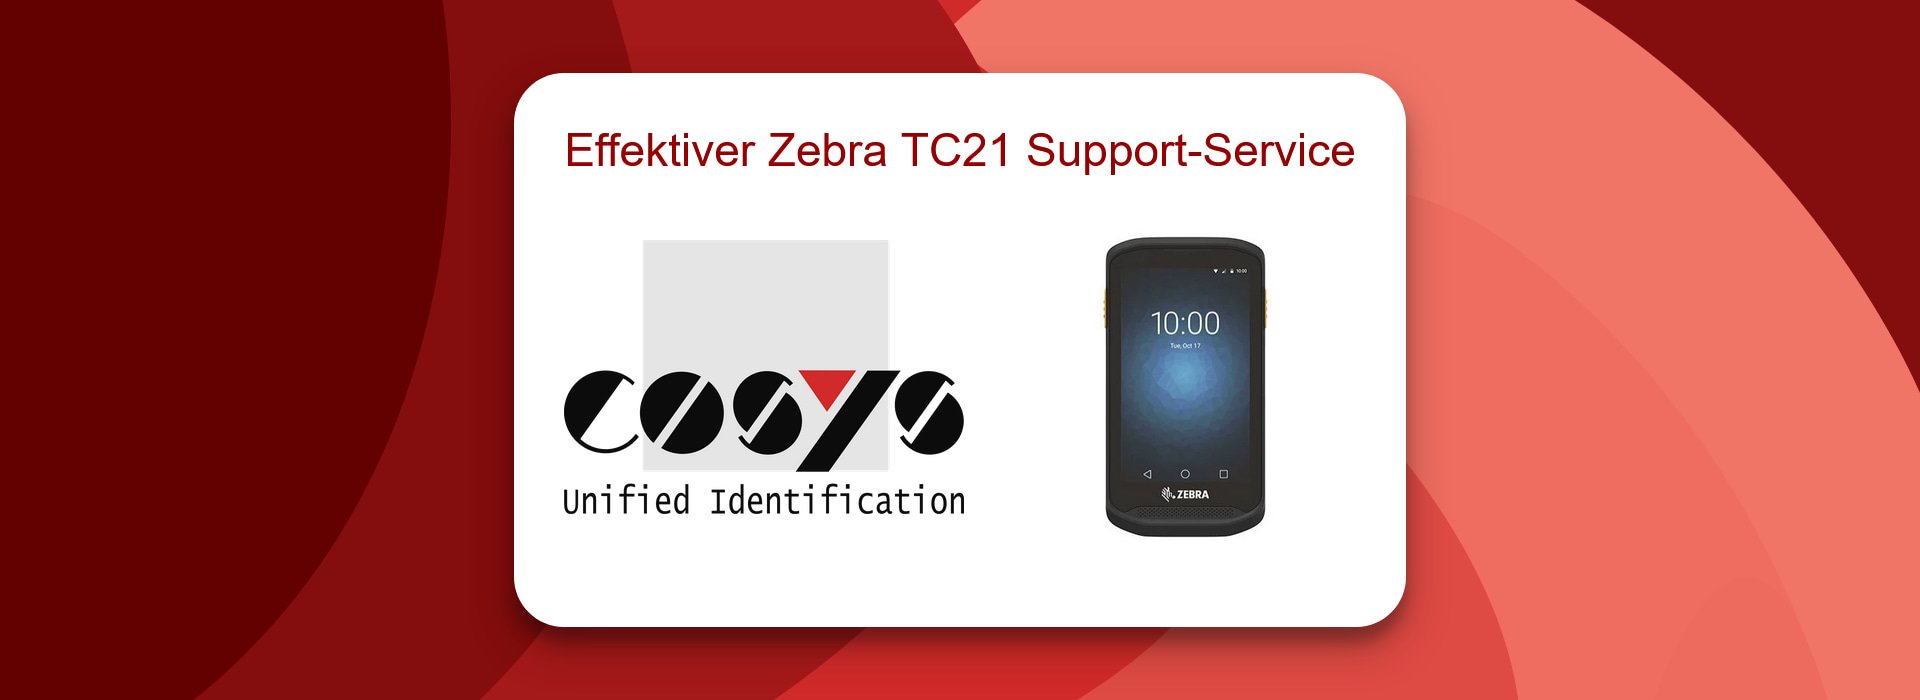 Effektiver Zebra TC21 Support-Service